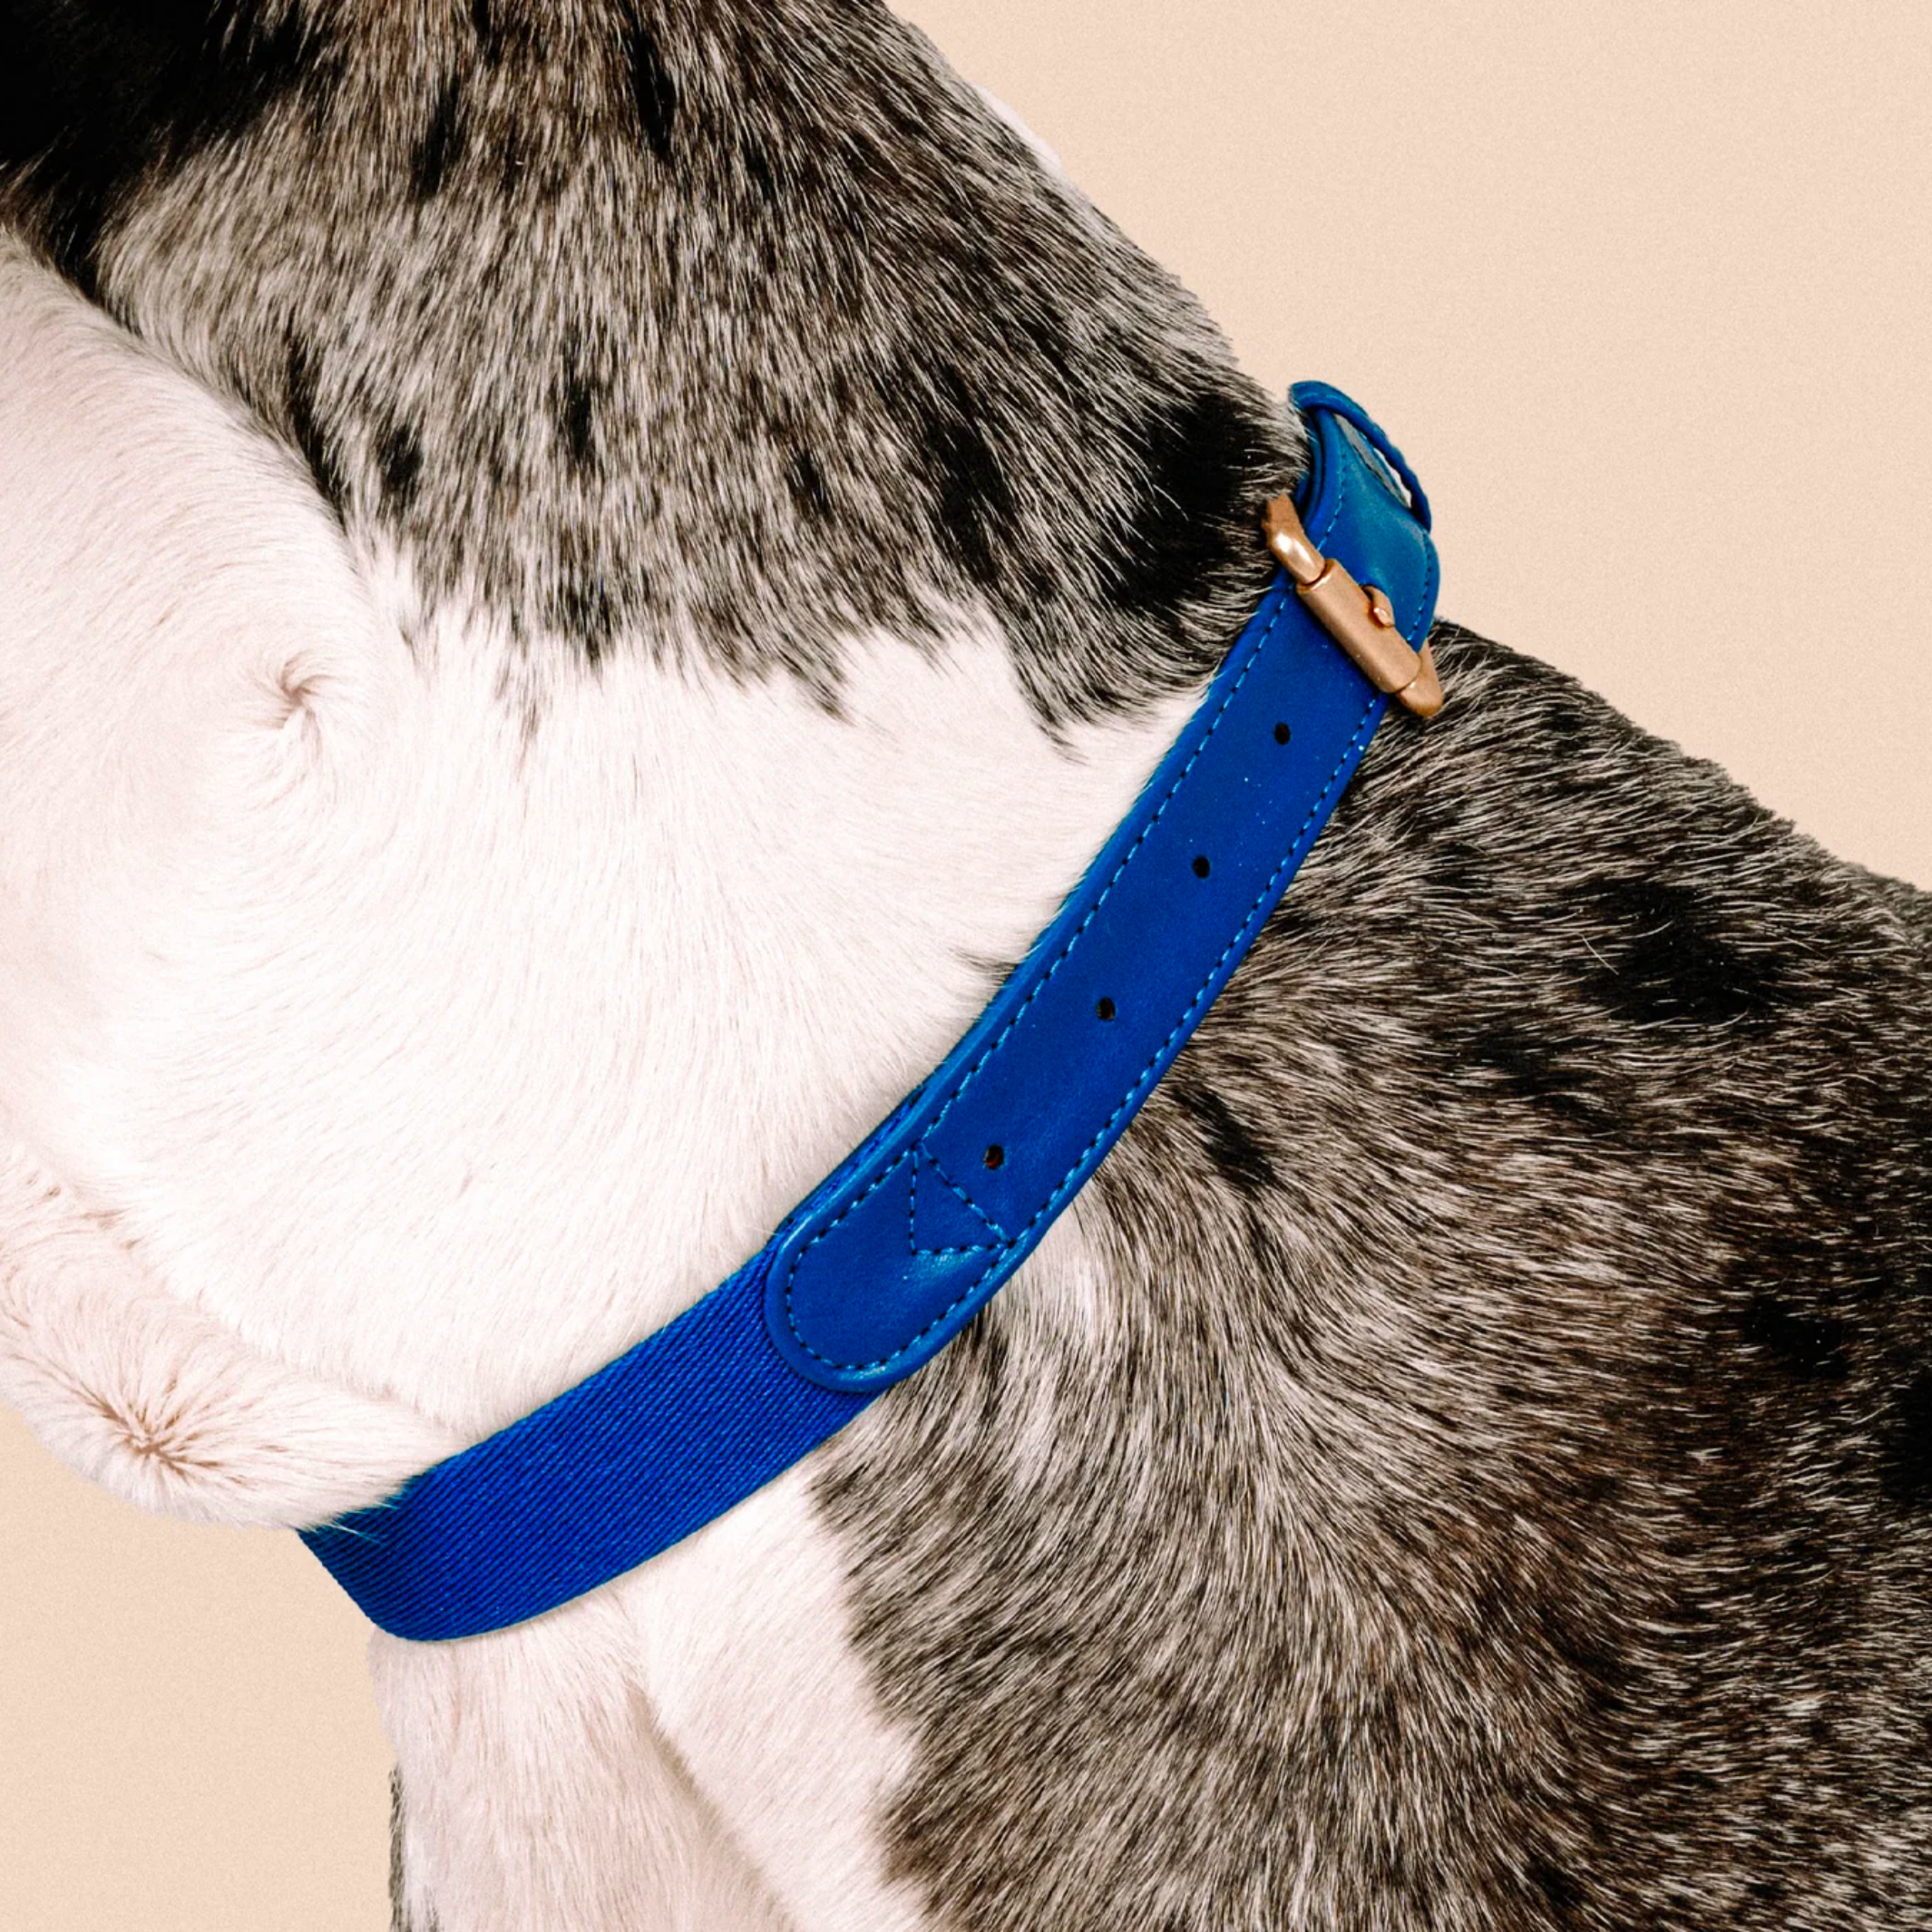 Blue Dog Collar